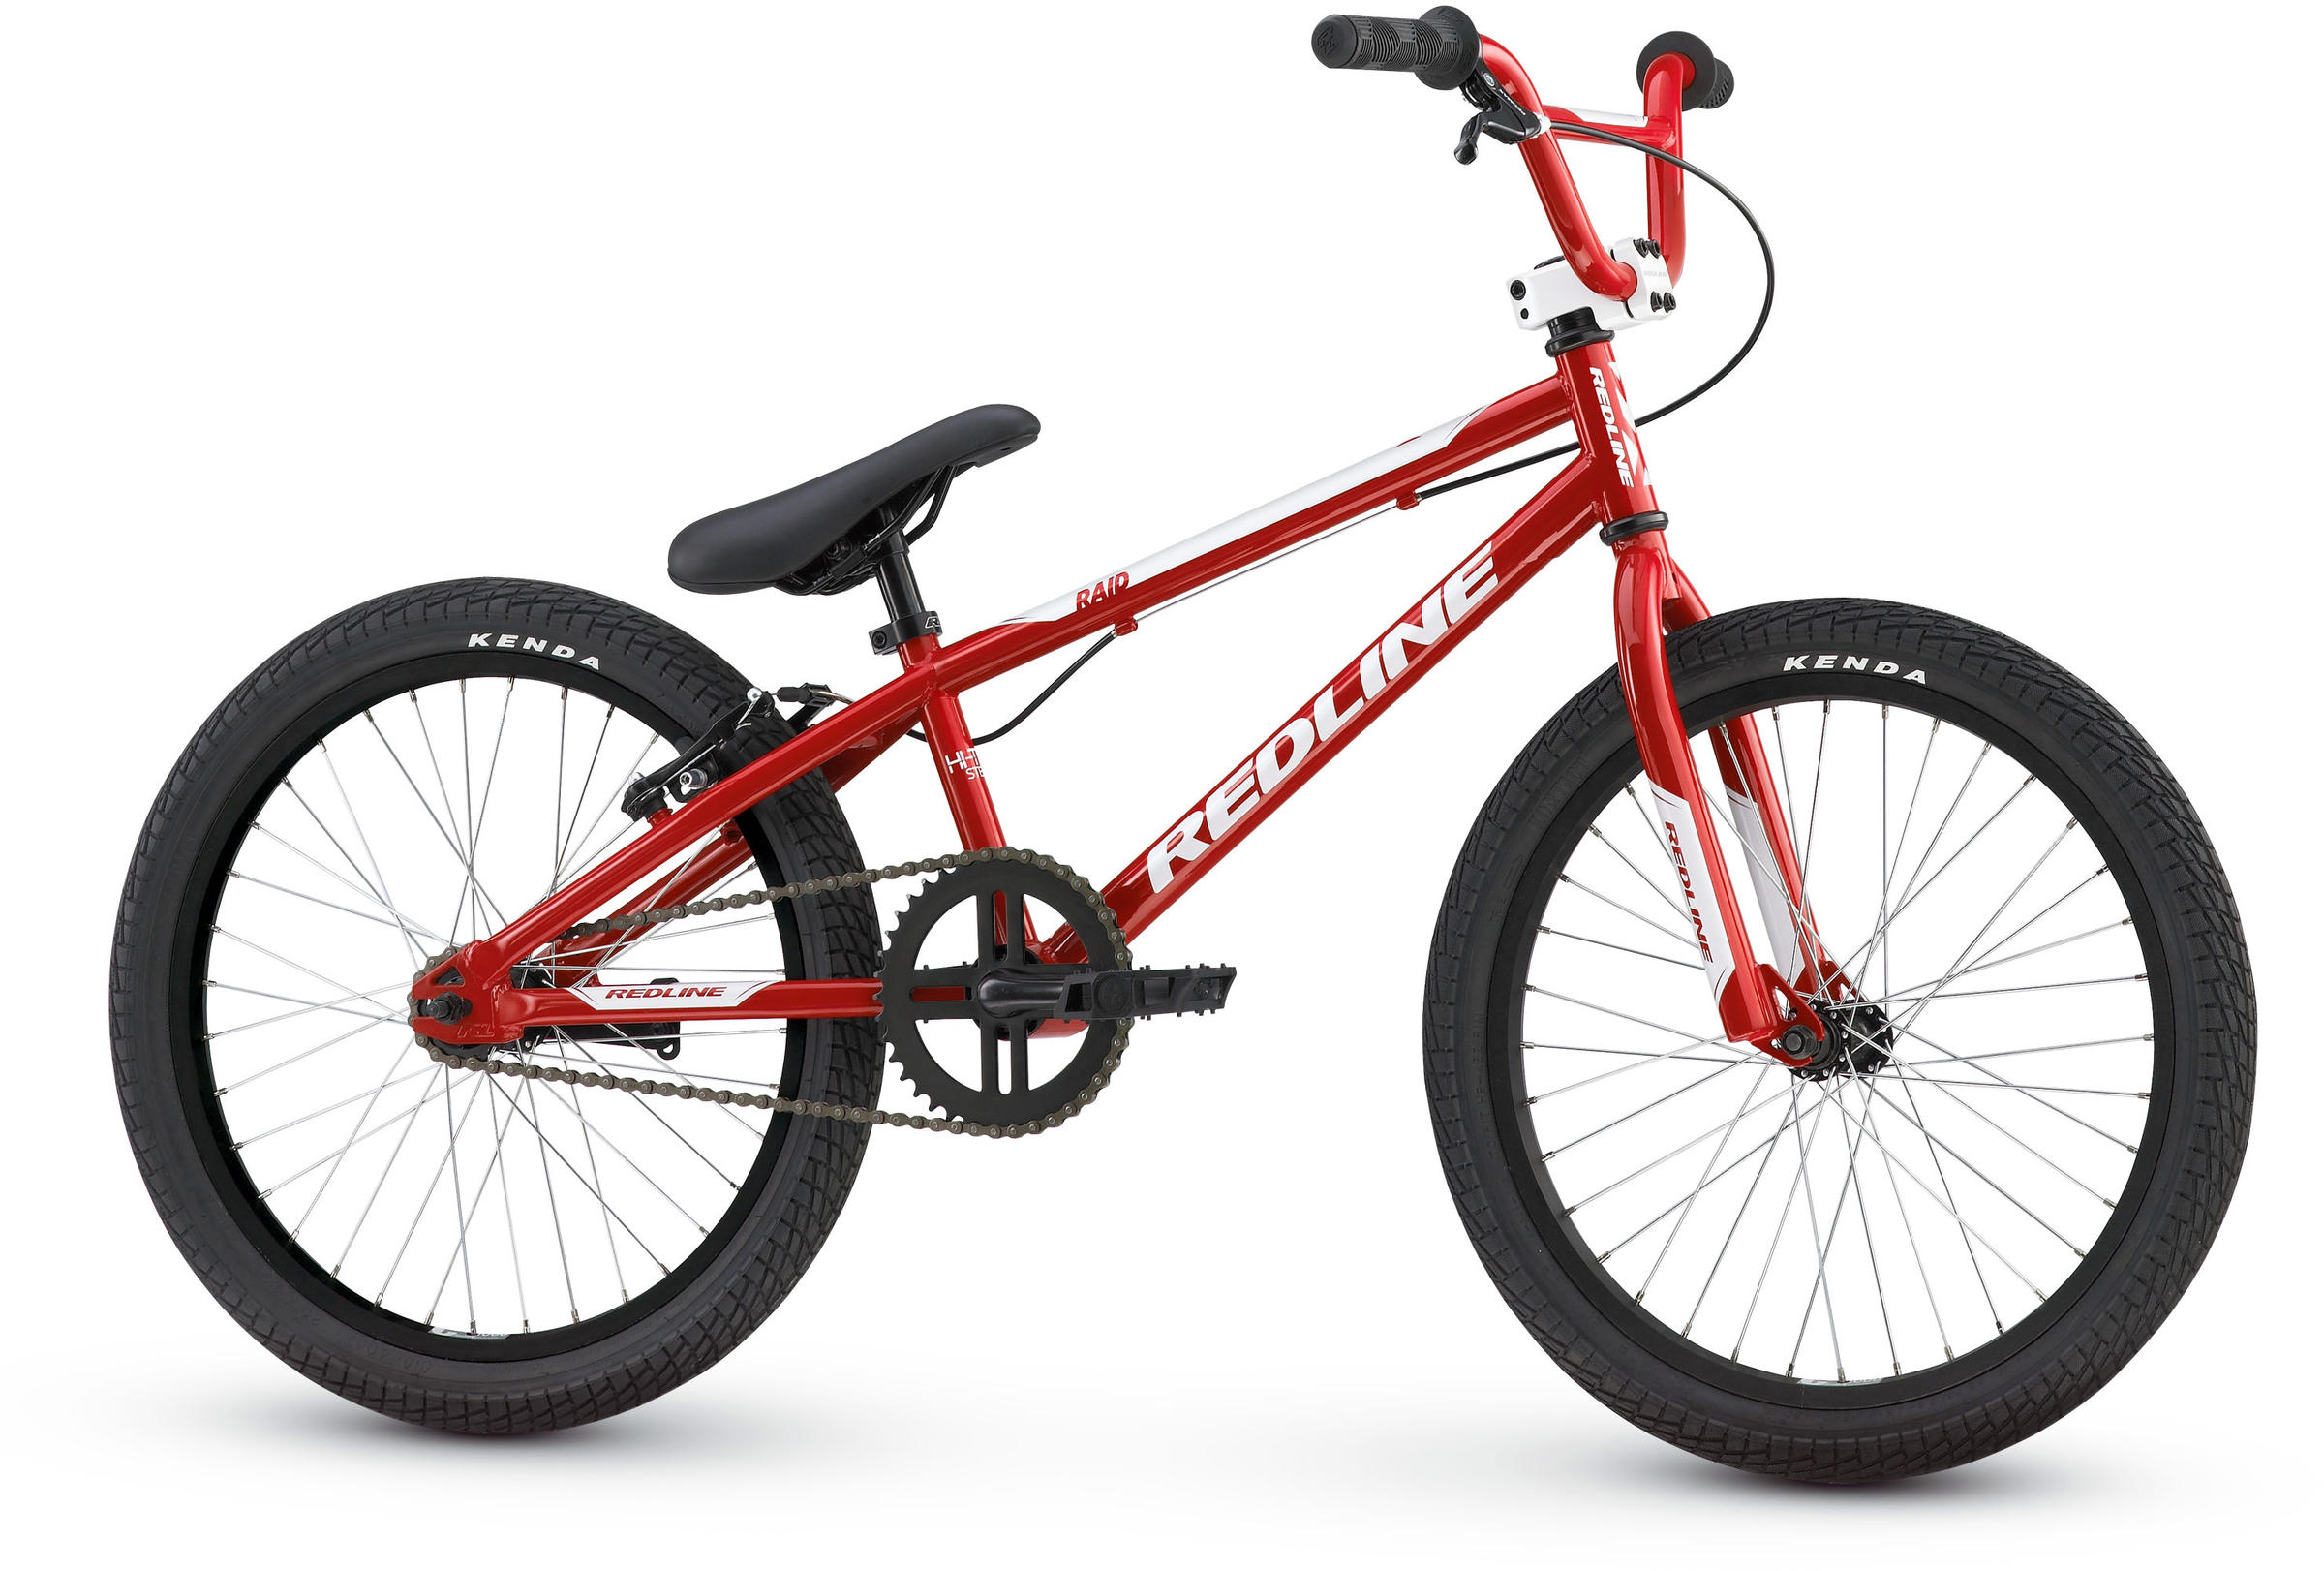 redline 20 inch bmx bike